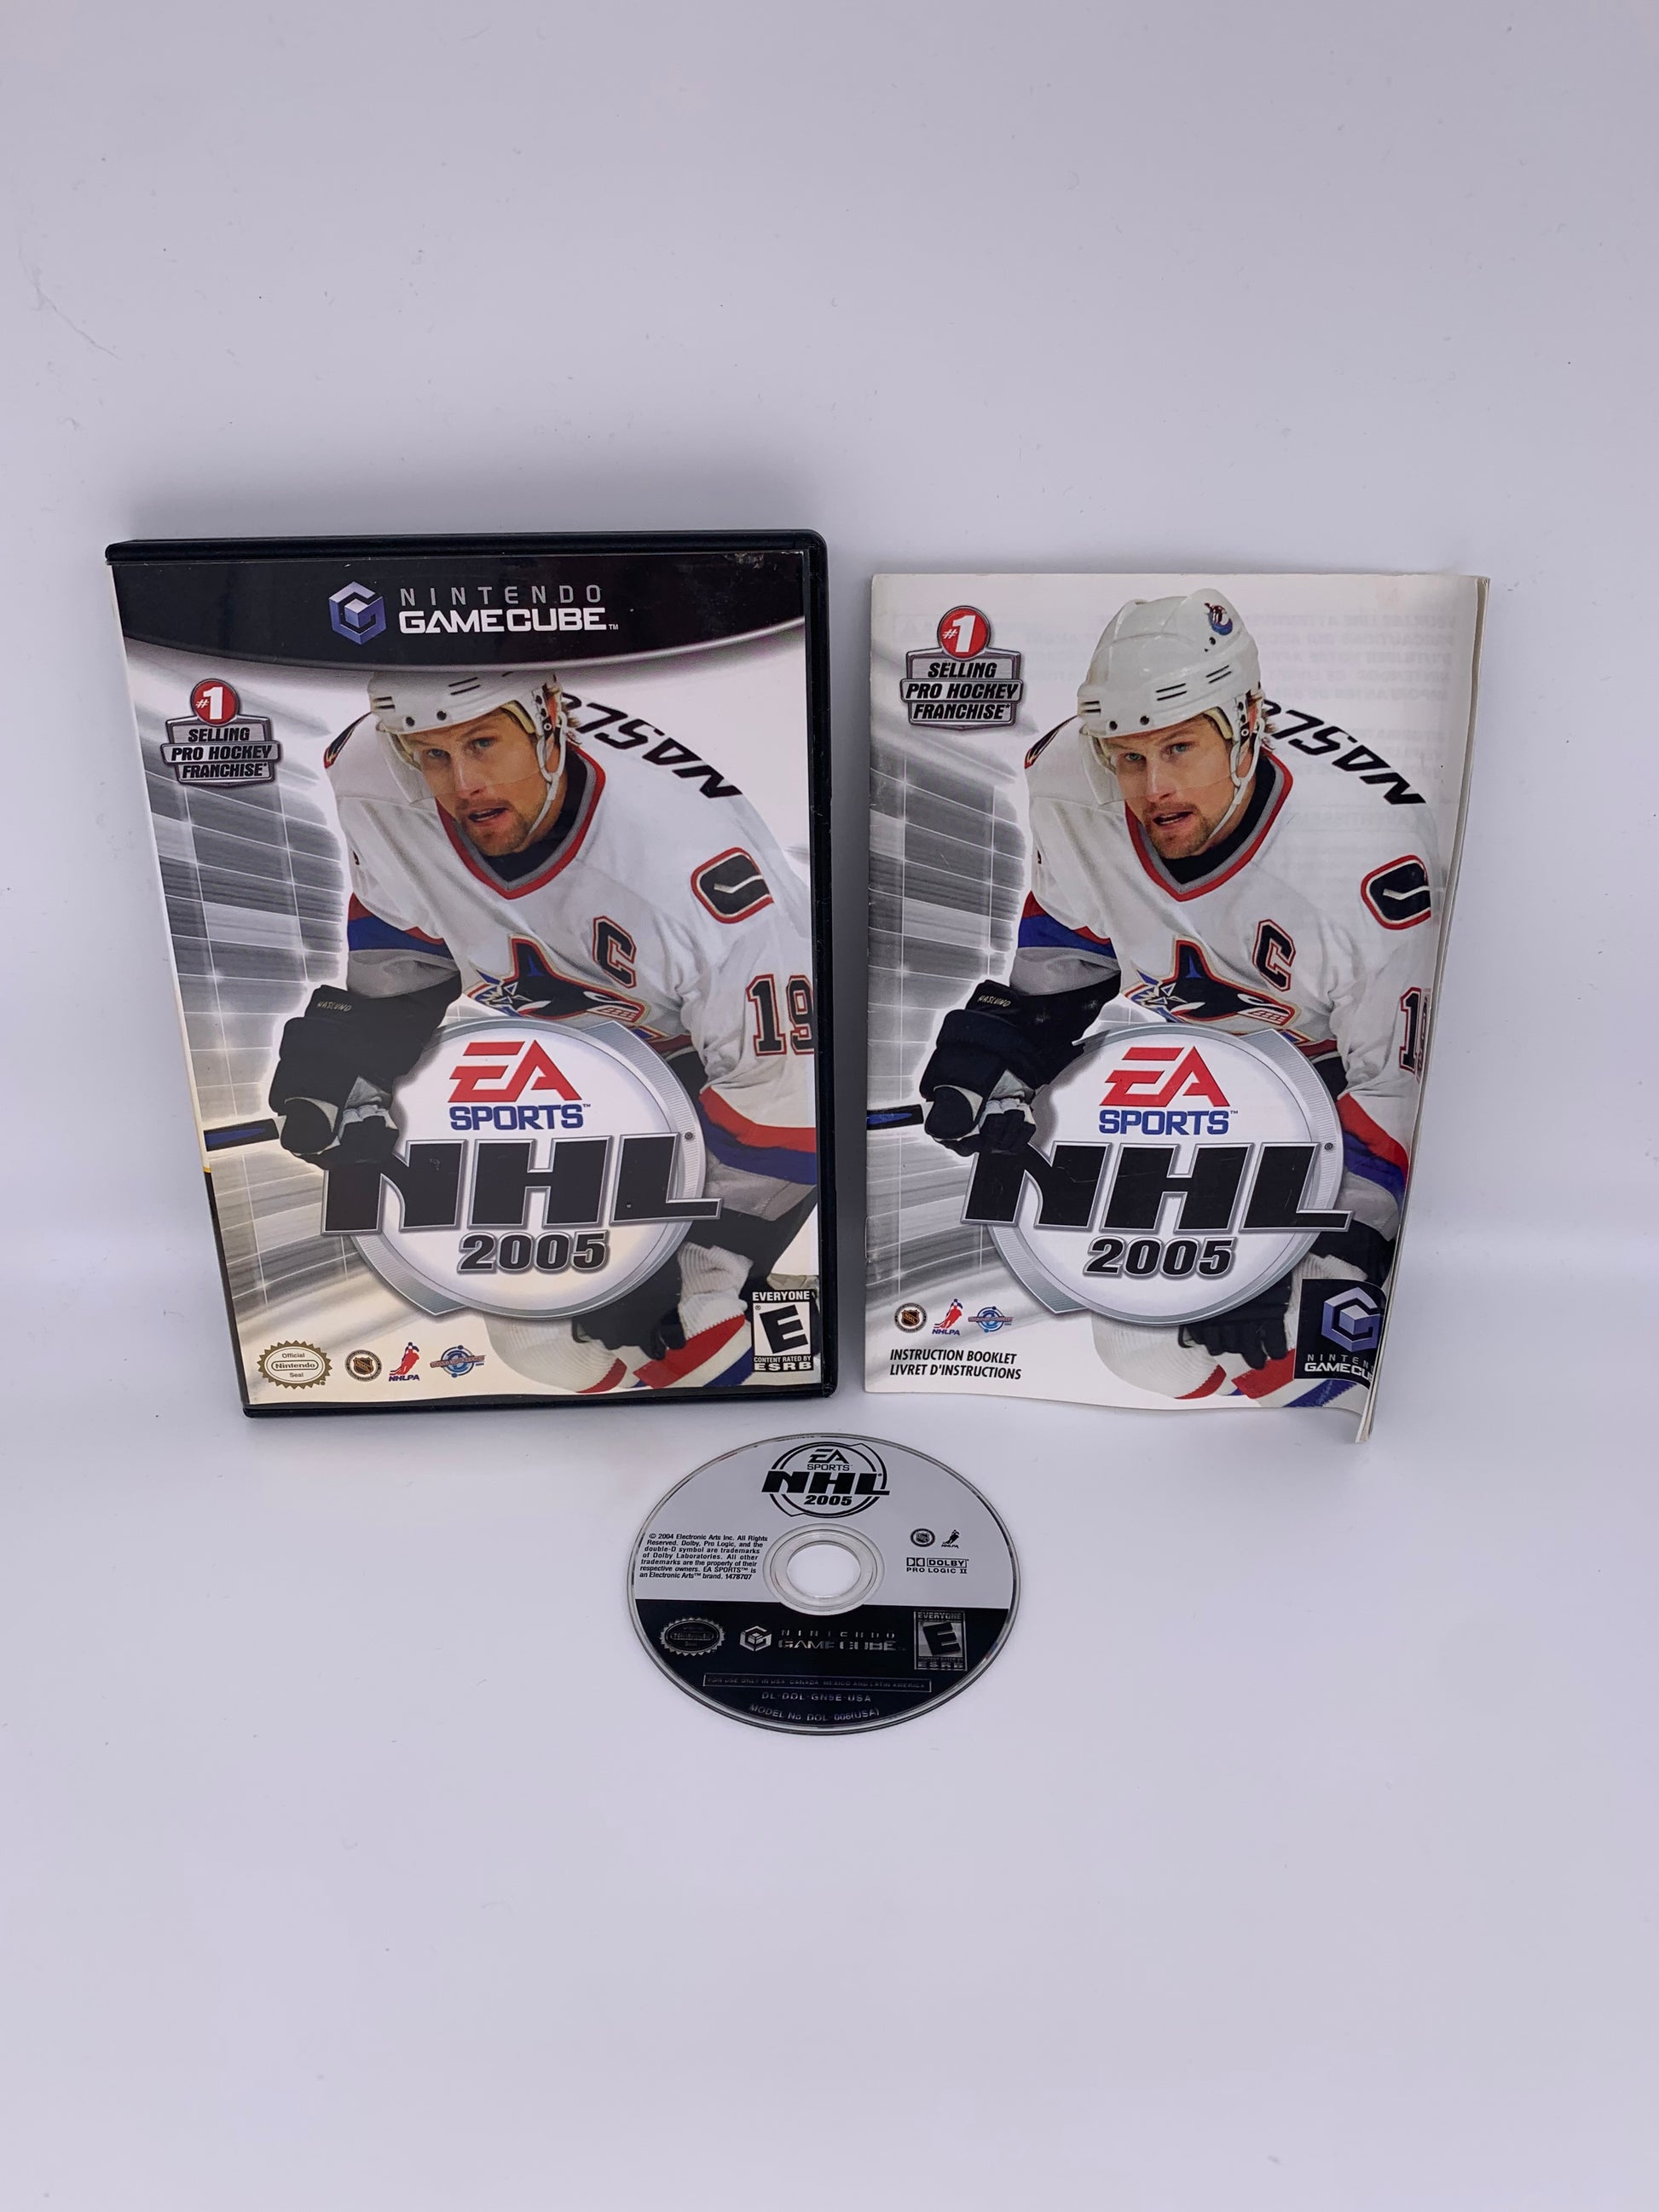 PiXEL-RETRO.COM : NINTENDO GAMECUBE COMPLETE CIB BOX MANUAL GAME NTSC NHL 2005